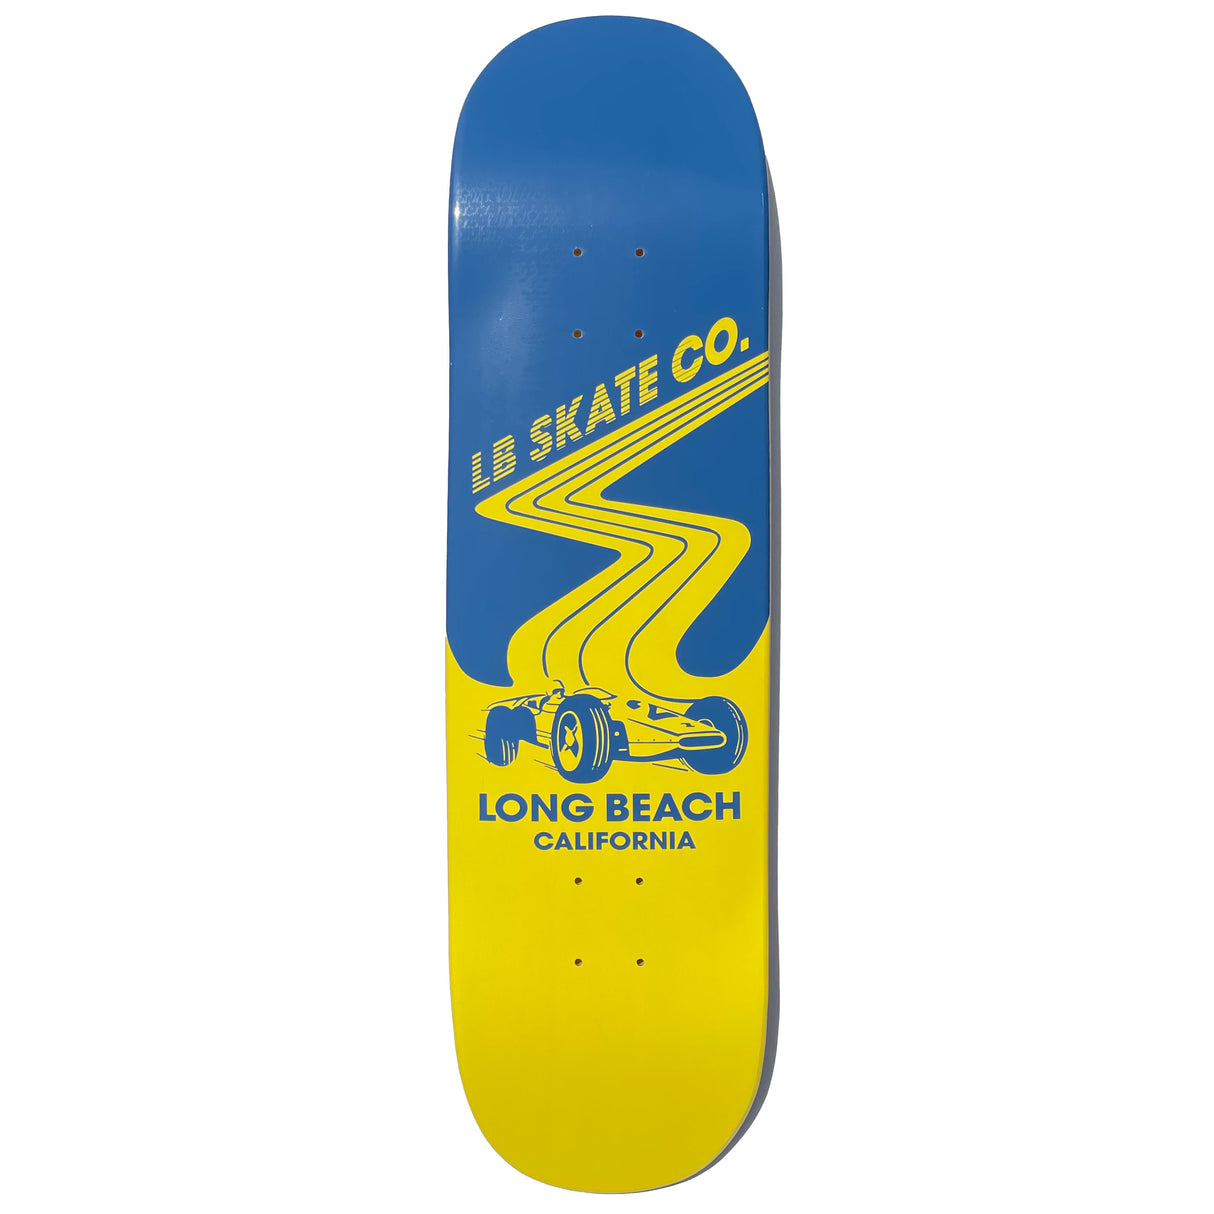 Long Beach Skate Co Land Skateboard Deck